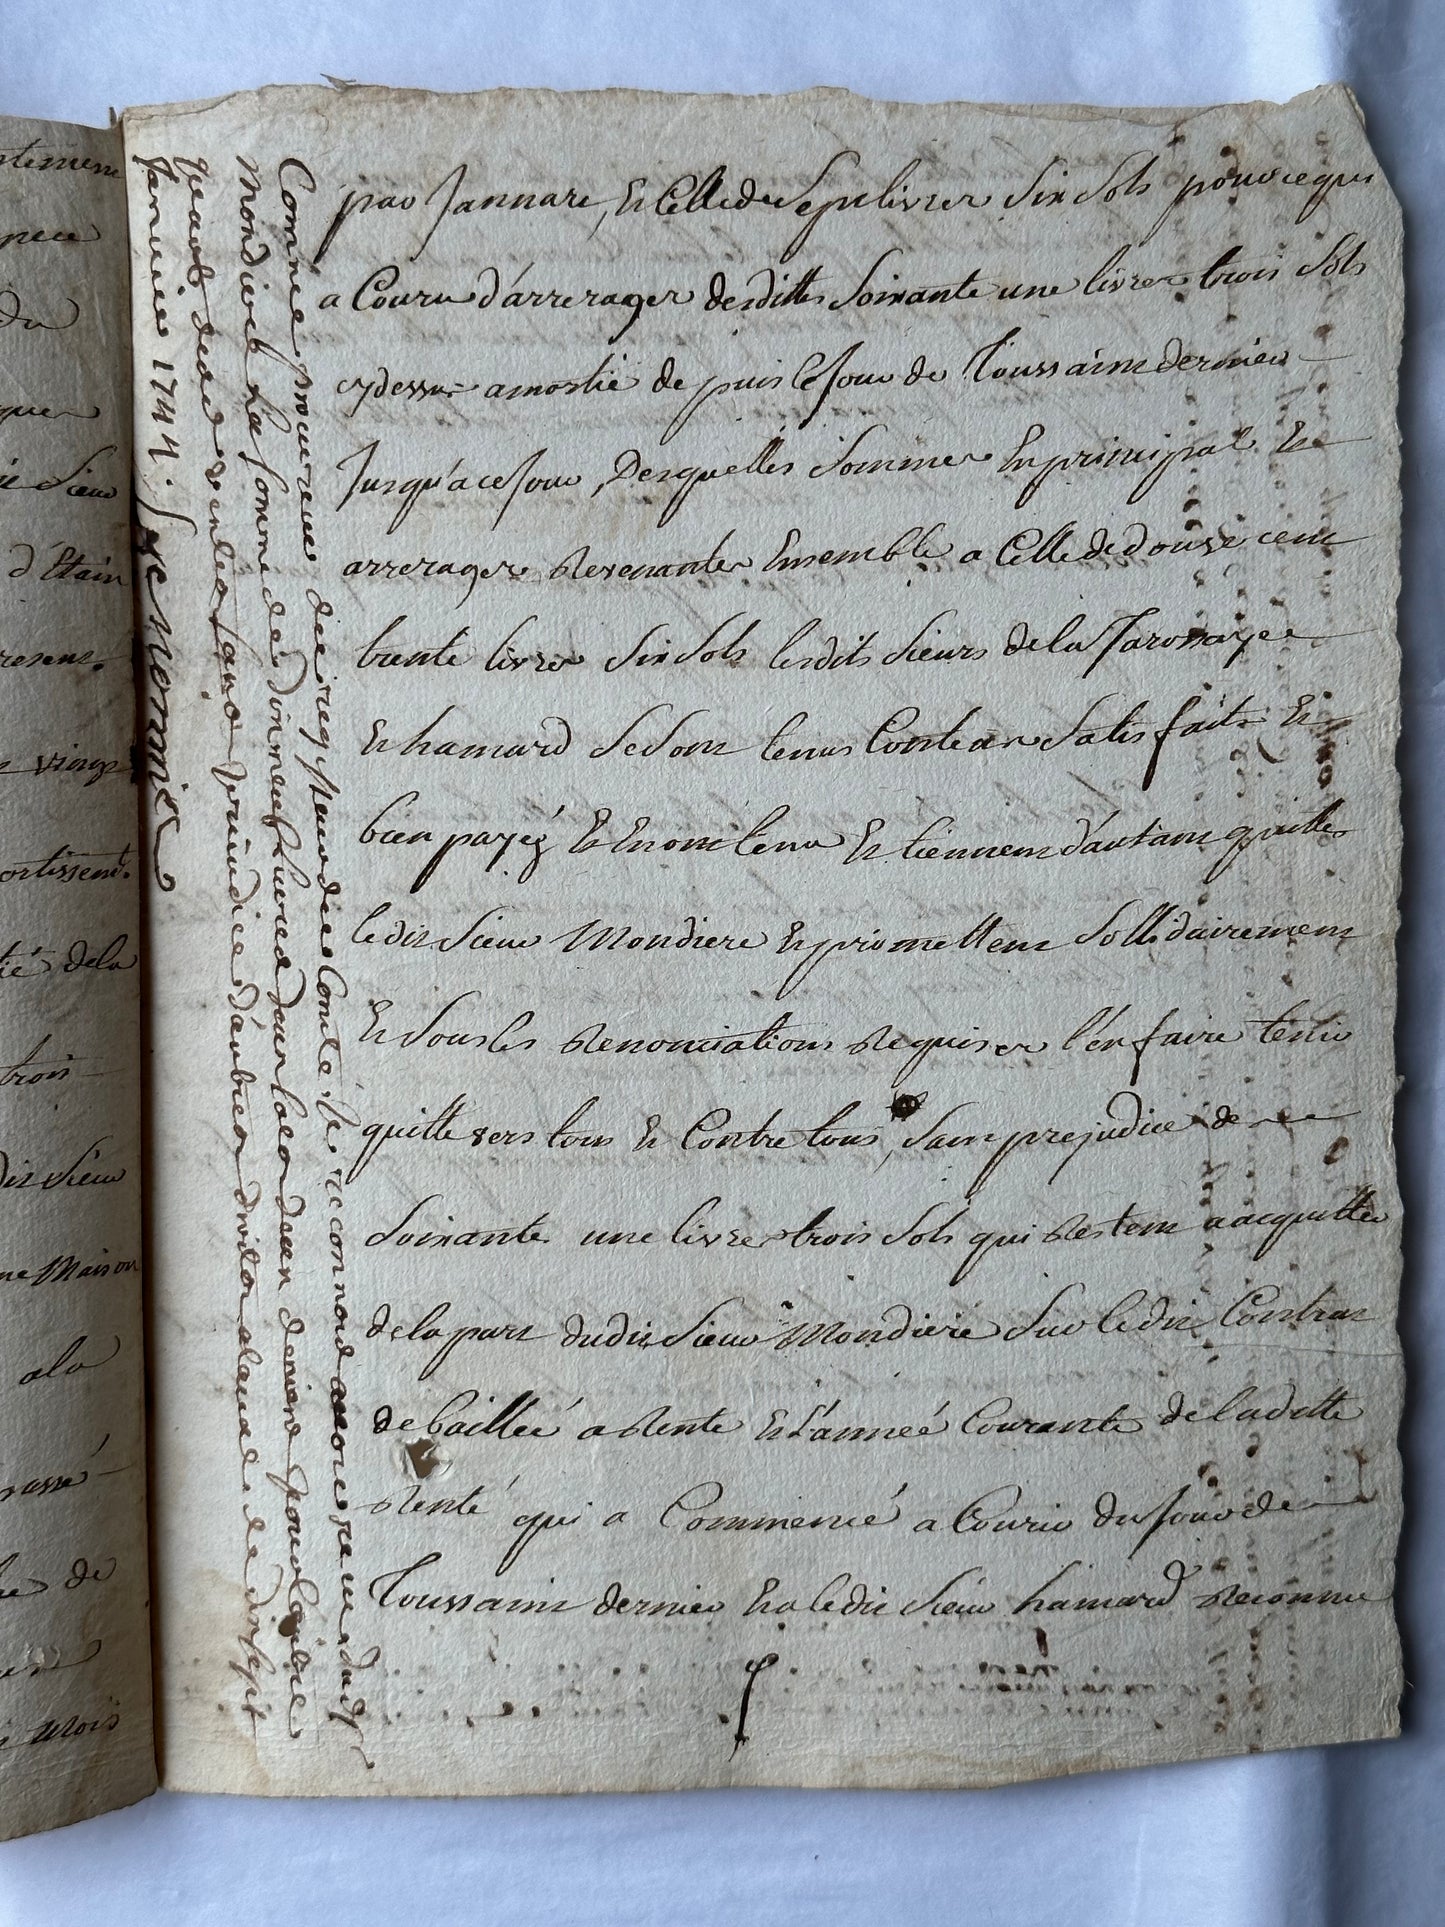 1743 French Legal Manuscript